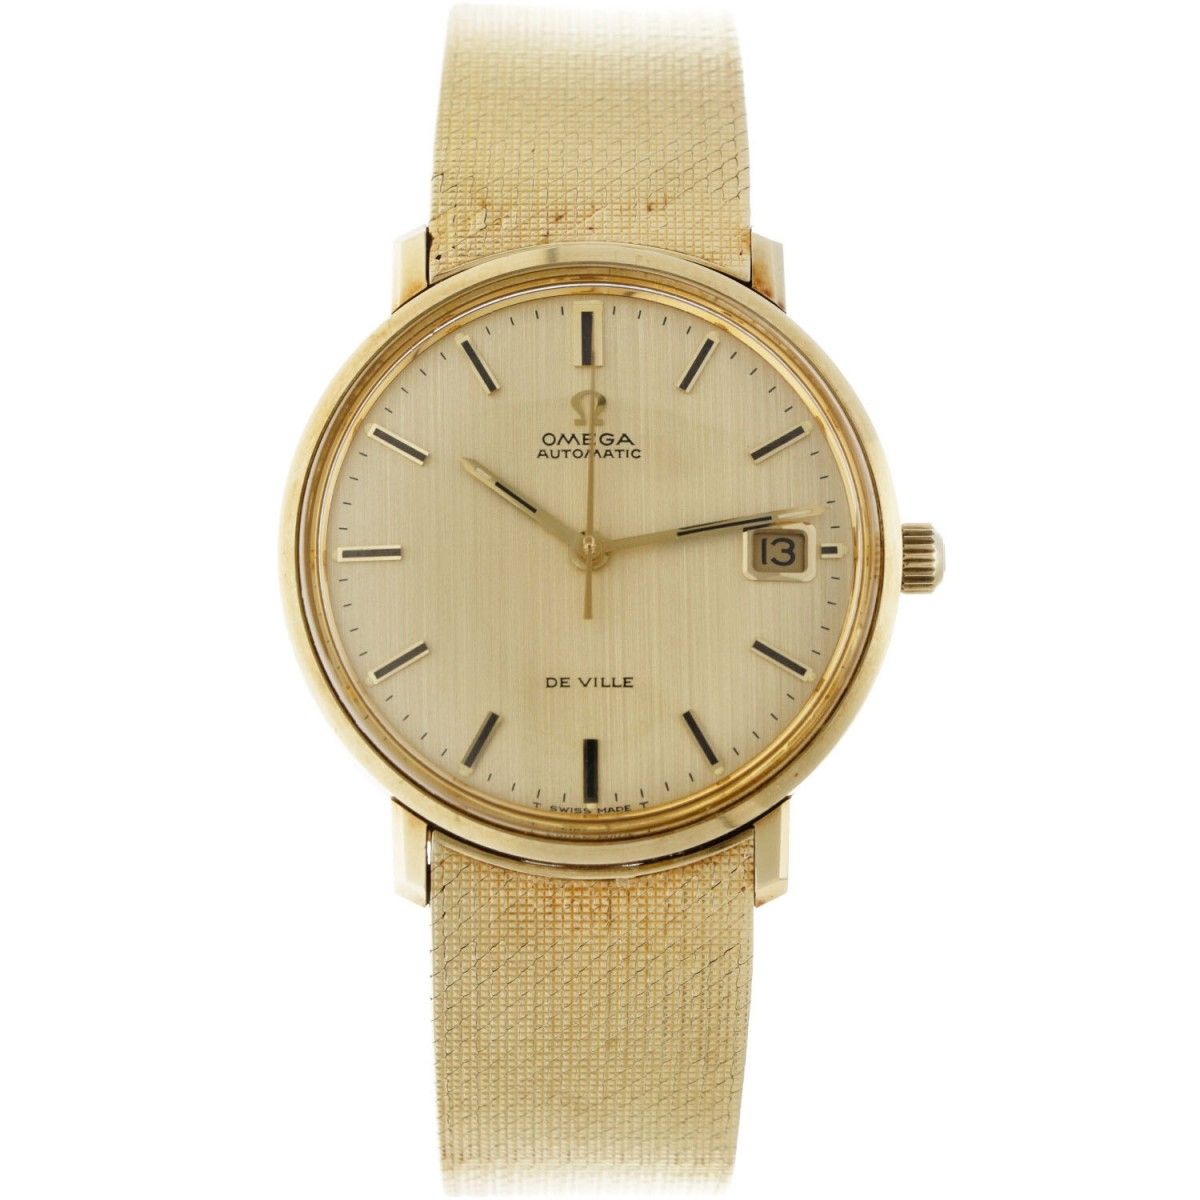 Omega de Ville 166.033 - Men's watch - apprx. 1974. Gehäuse: Gelbgold (14 kt.) -&hellip;